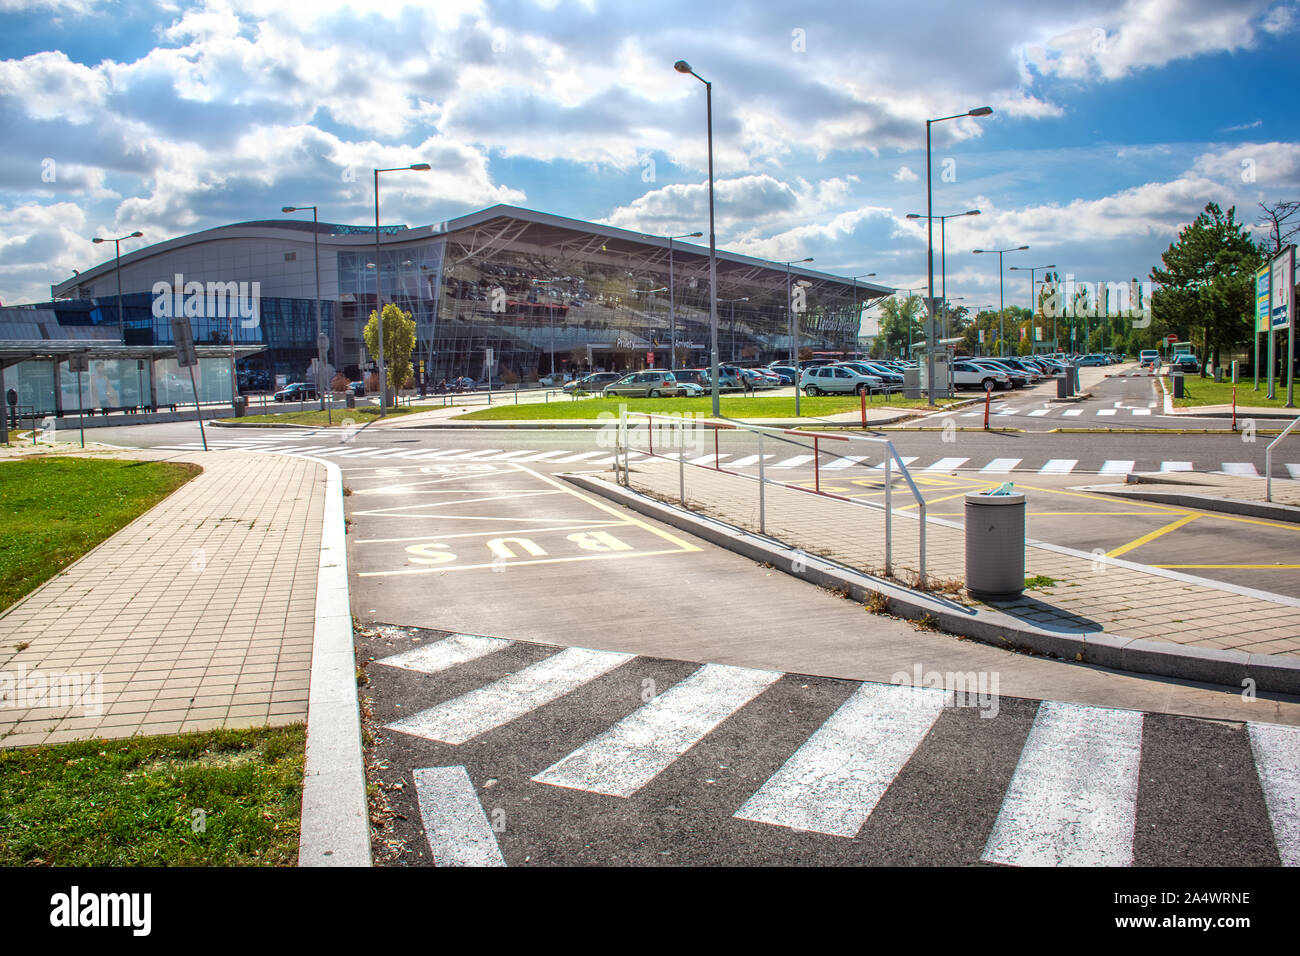 BRATISLAVA, Slowakei - 6. OKTOBER 2019: Blick auf Bratislava Flughafen Terminal mit Parkplatz voller Autos (Slowakei) Stockfoto